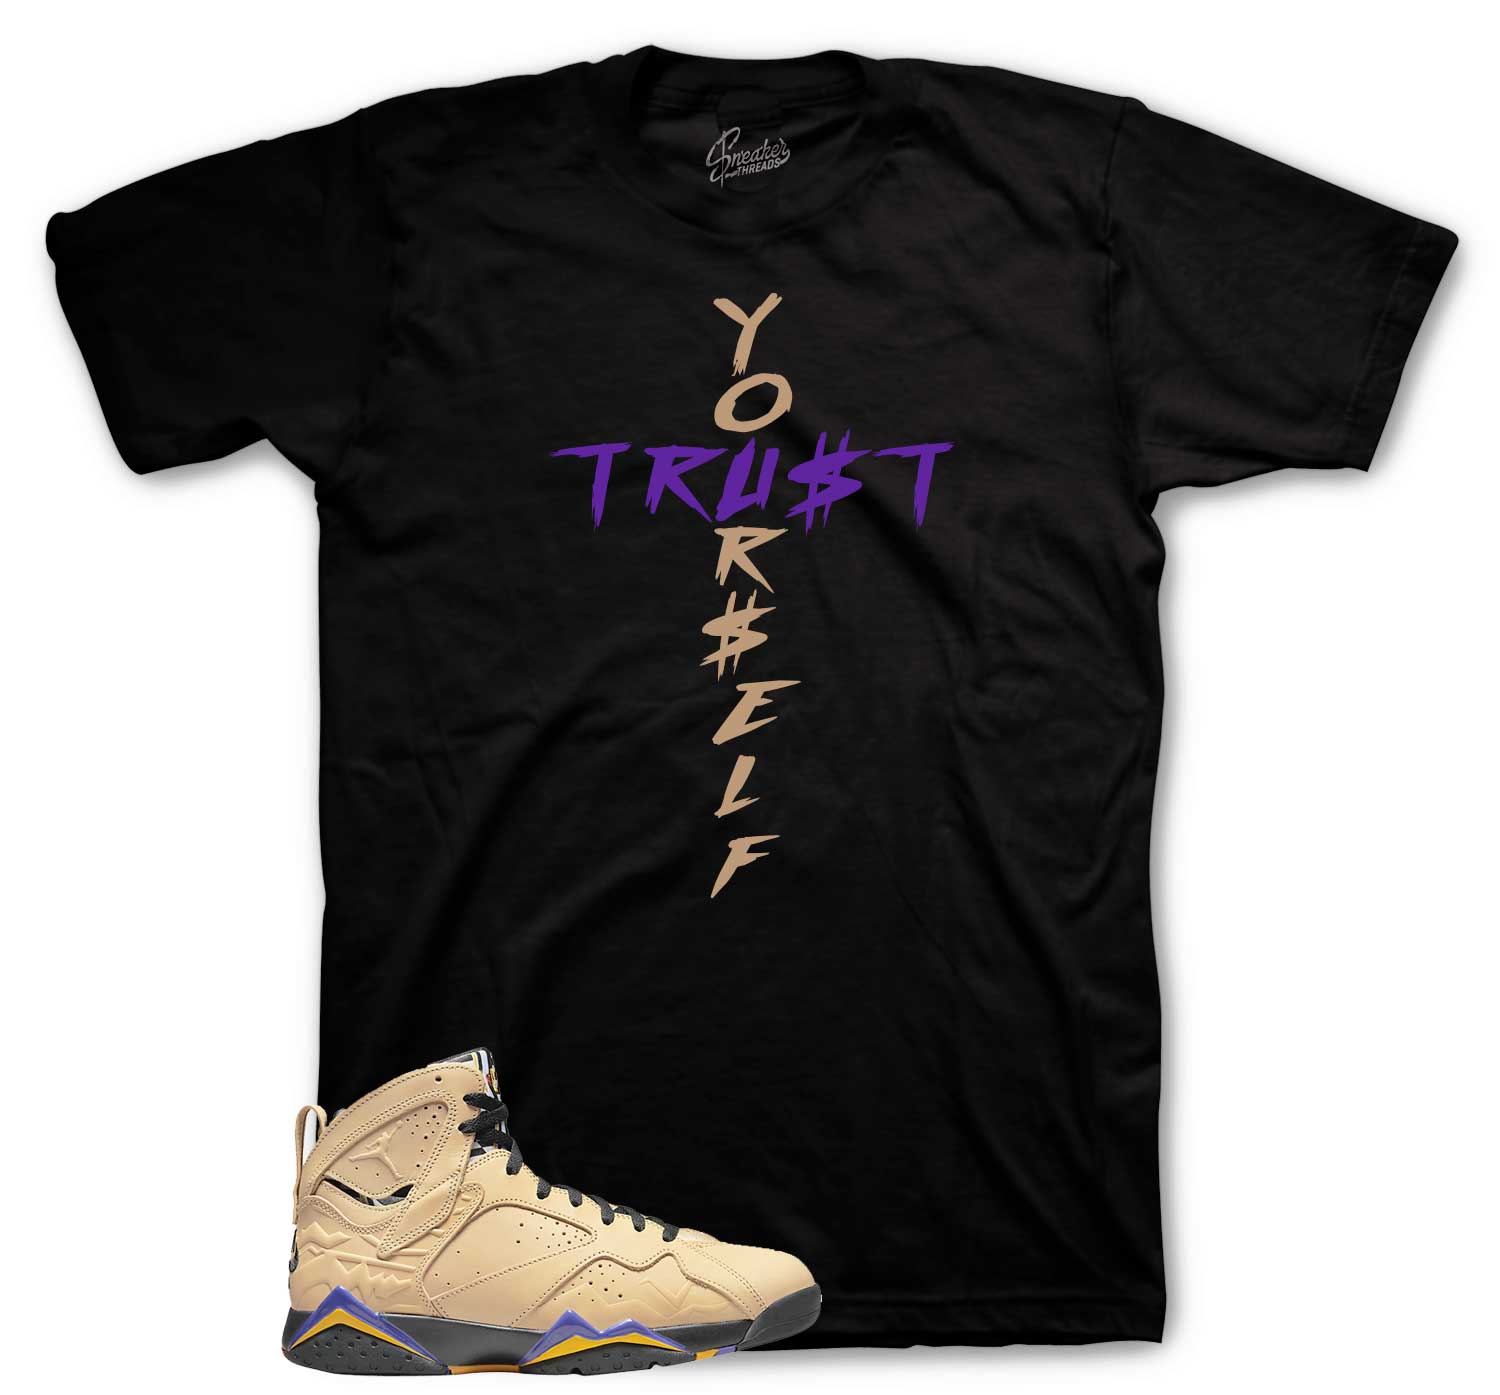 Retro 7 Vachetta Tan Shirt - Trust Yourself - Black